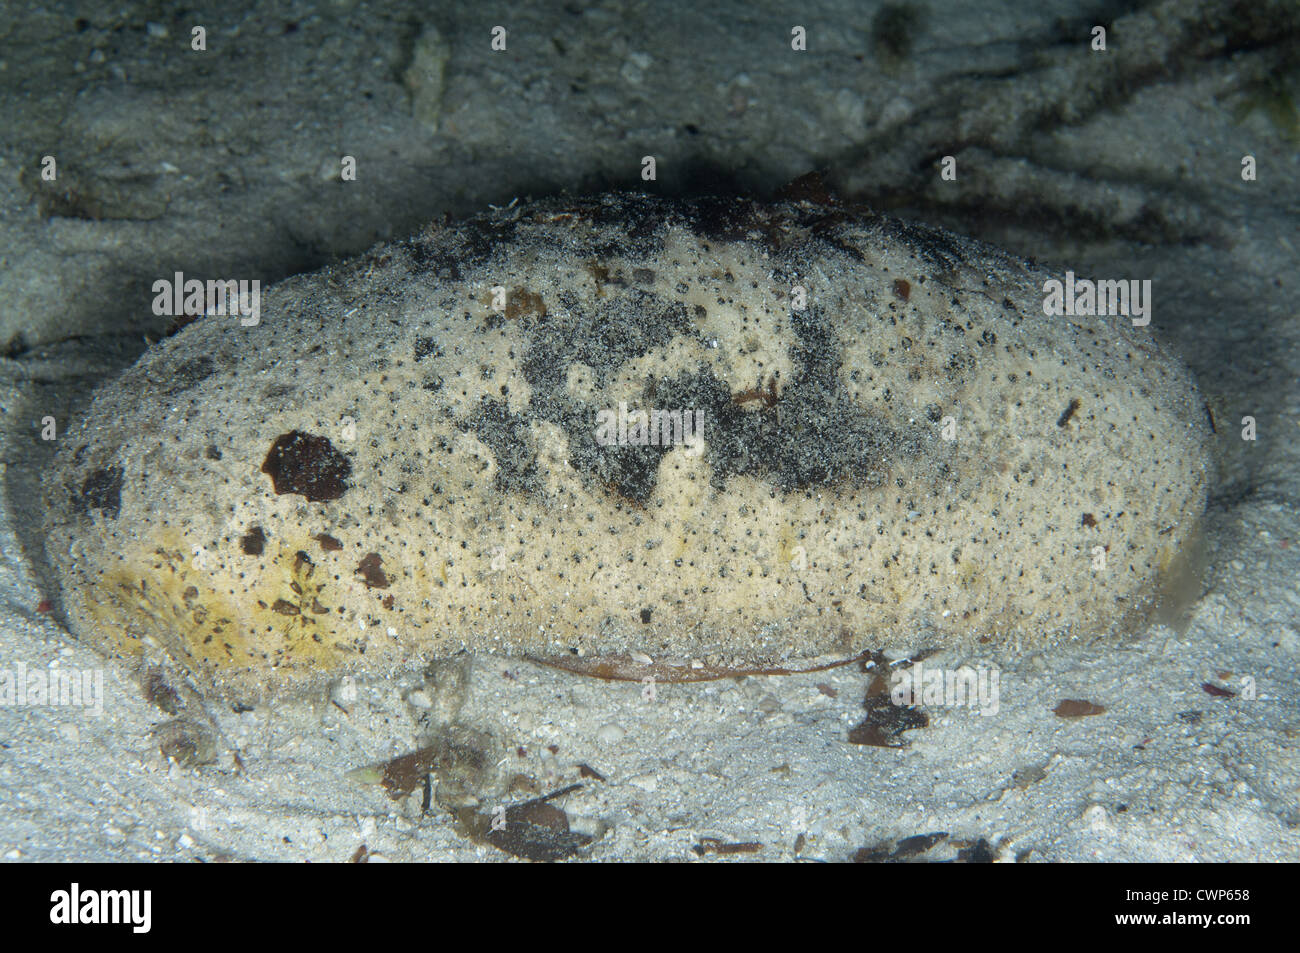 White Teatfish Sea Cucumber (Holothuria fuscogilva) adult, on seabed at night, Waigeo Island, Raja Ampat Islands (Four Kings), Stock Photo